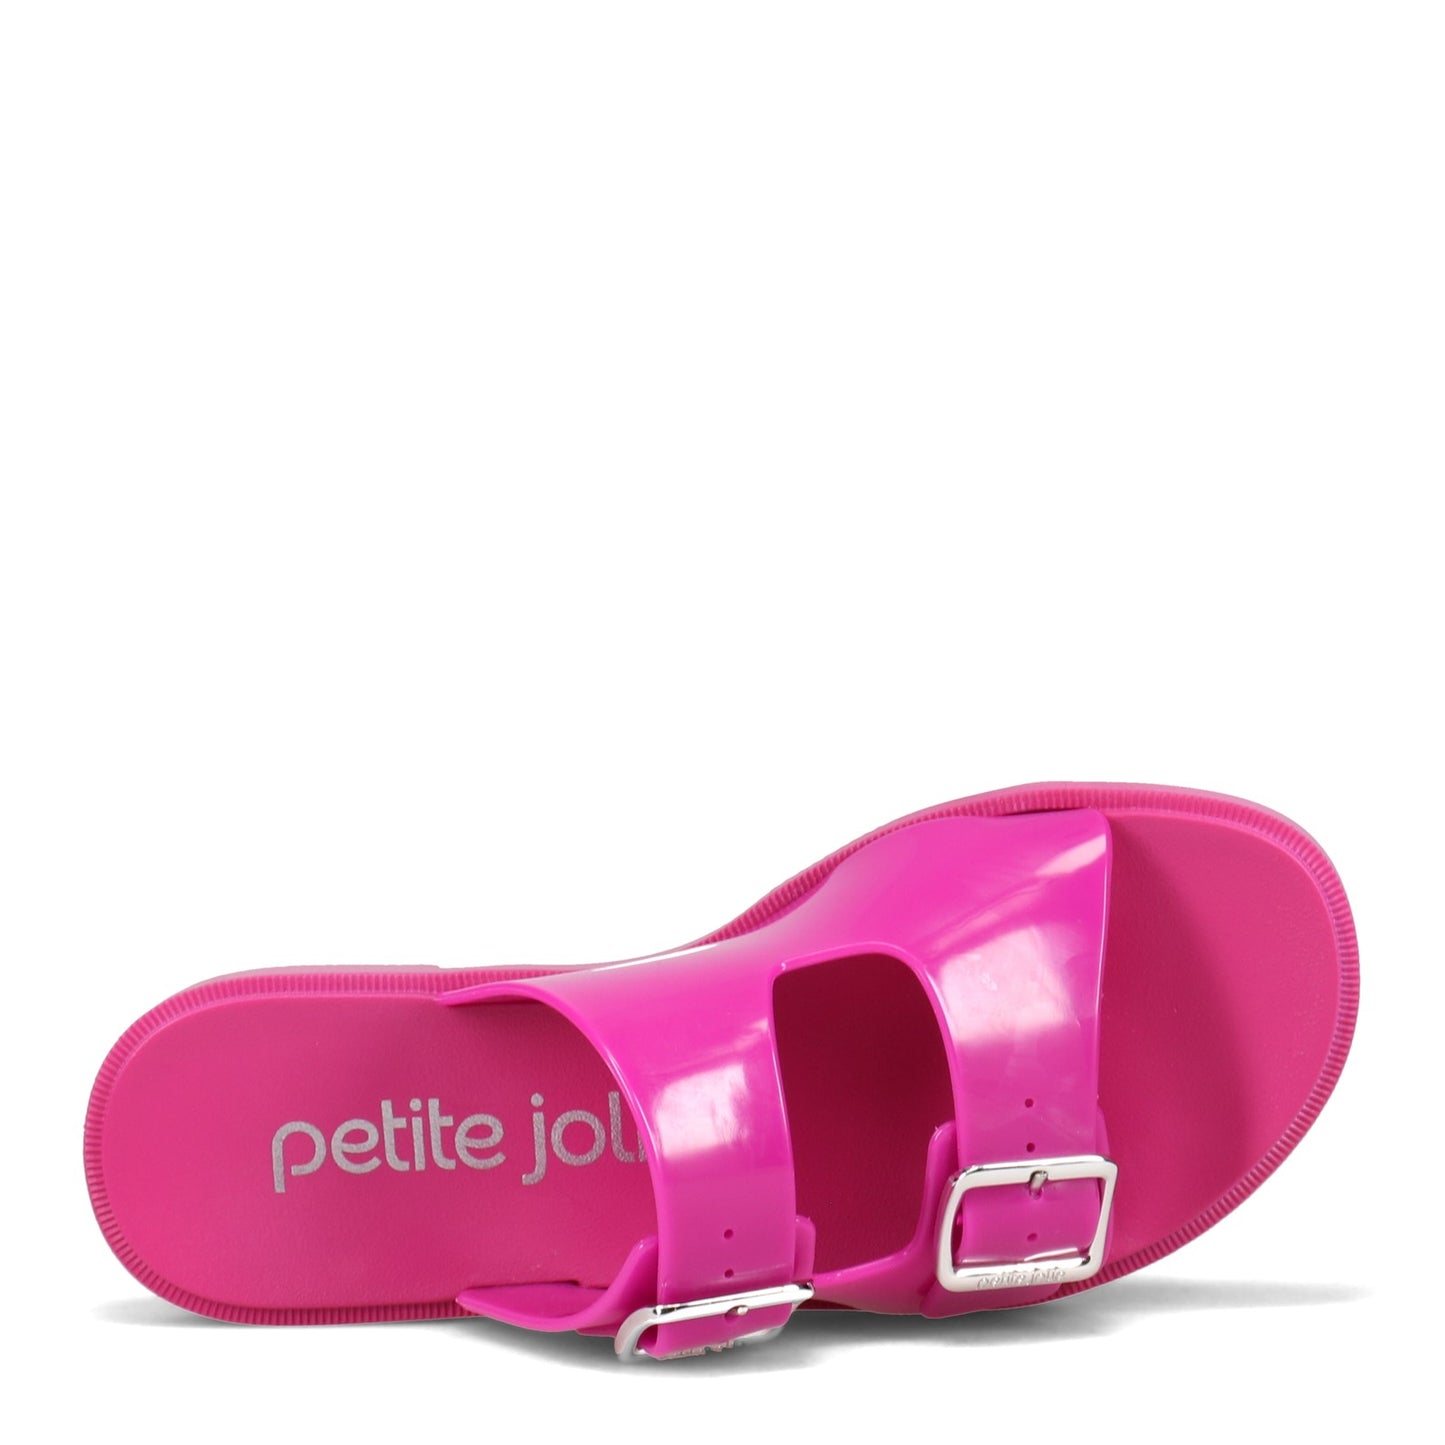 Petite Jolie Women's Play Sandals